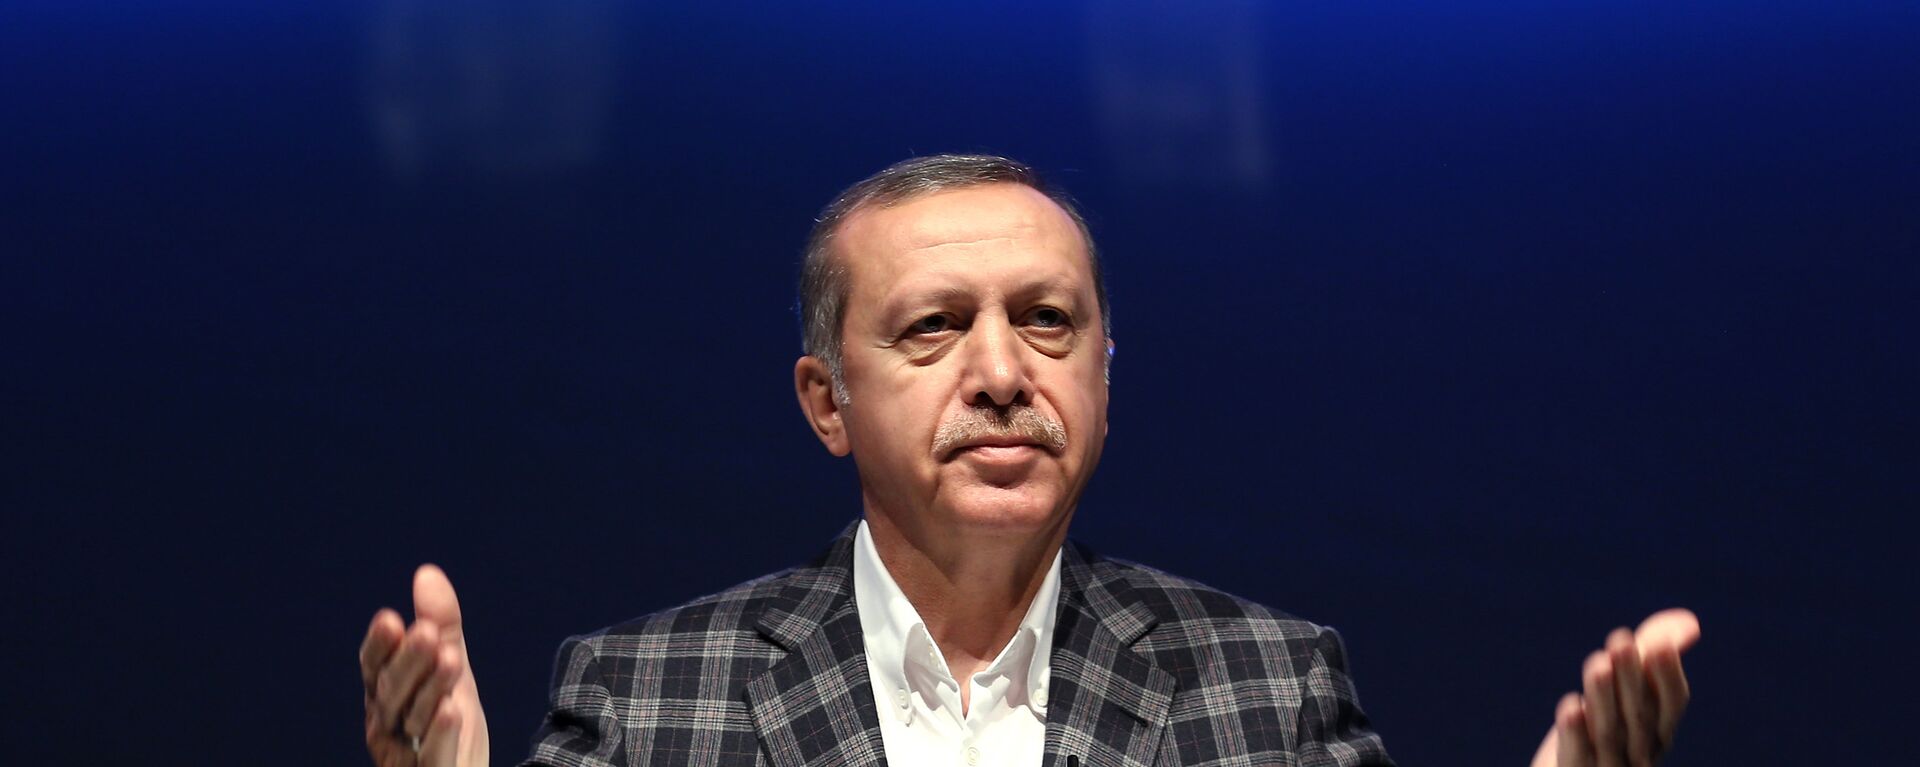 Turkey's President Recep Tayyip Erdogan speaks during a meeting on work security, in Istanbul, Sunday, May 8, 2016.  - Sputnik Mundo, 1920, 05.04.2021